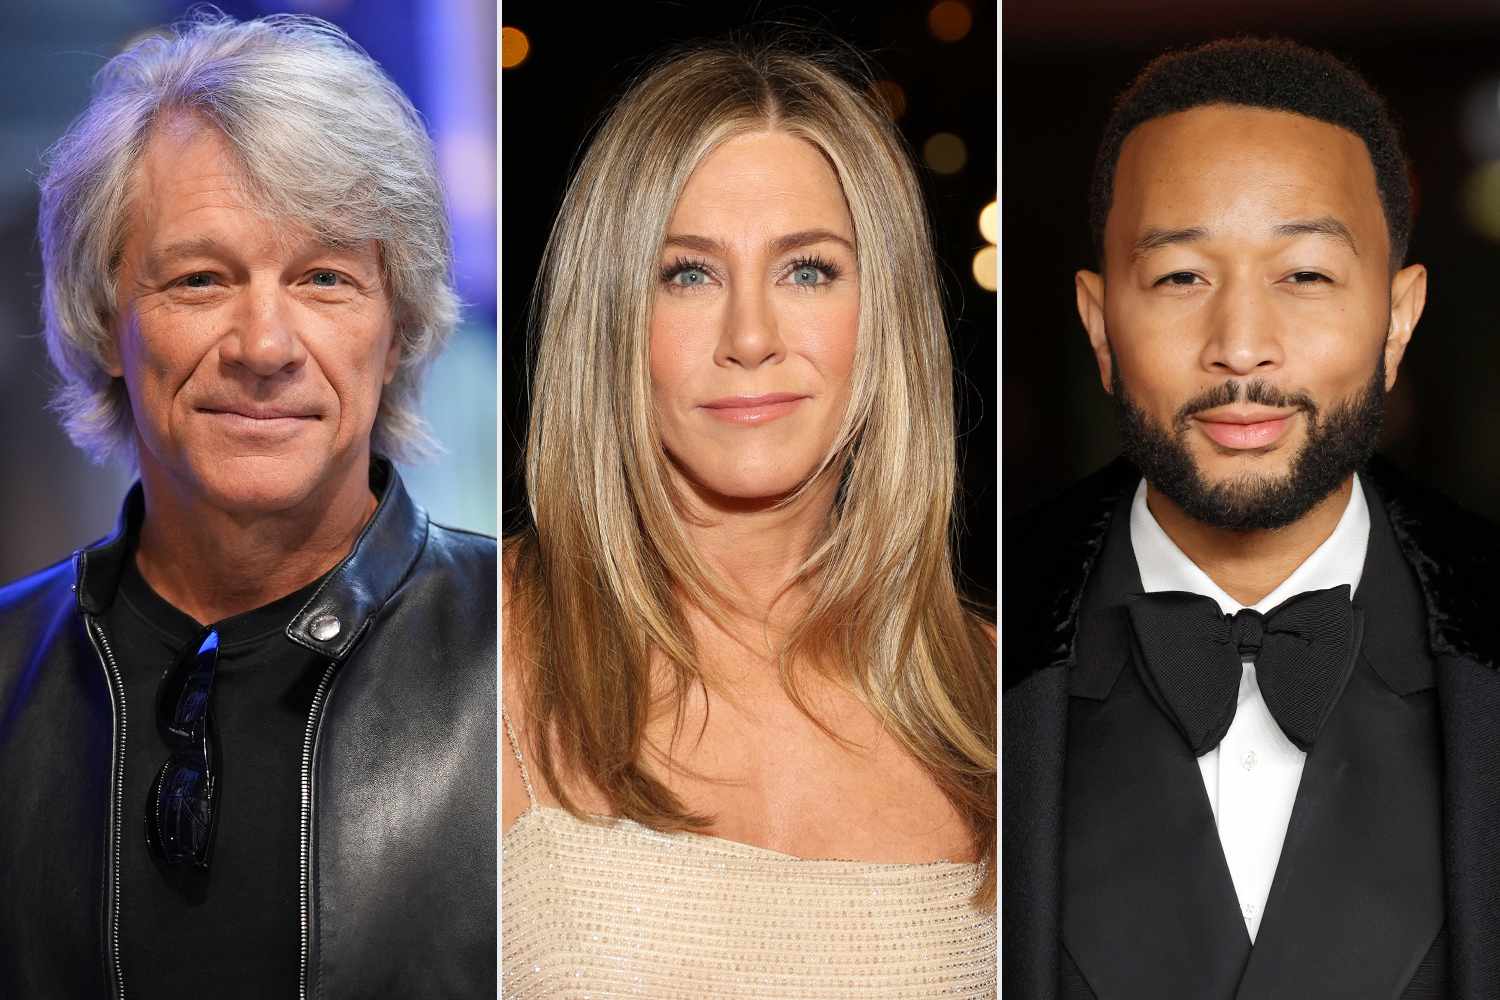 Jon Bon Jovi, Jennifer Aniston and 28 Other Celebrities Who Changed Their Names